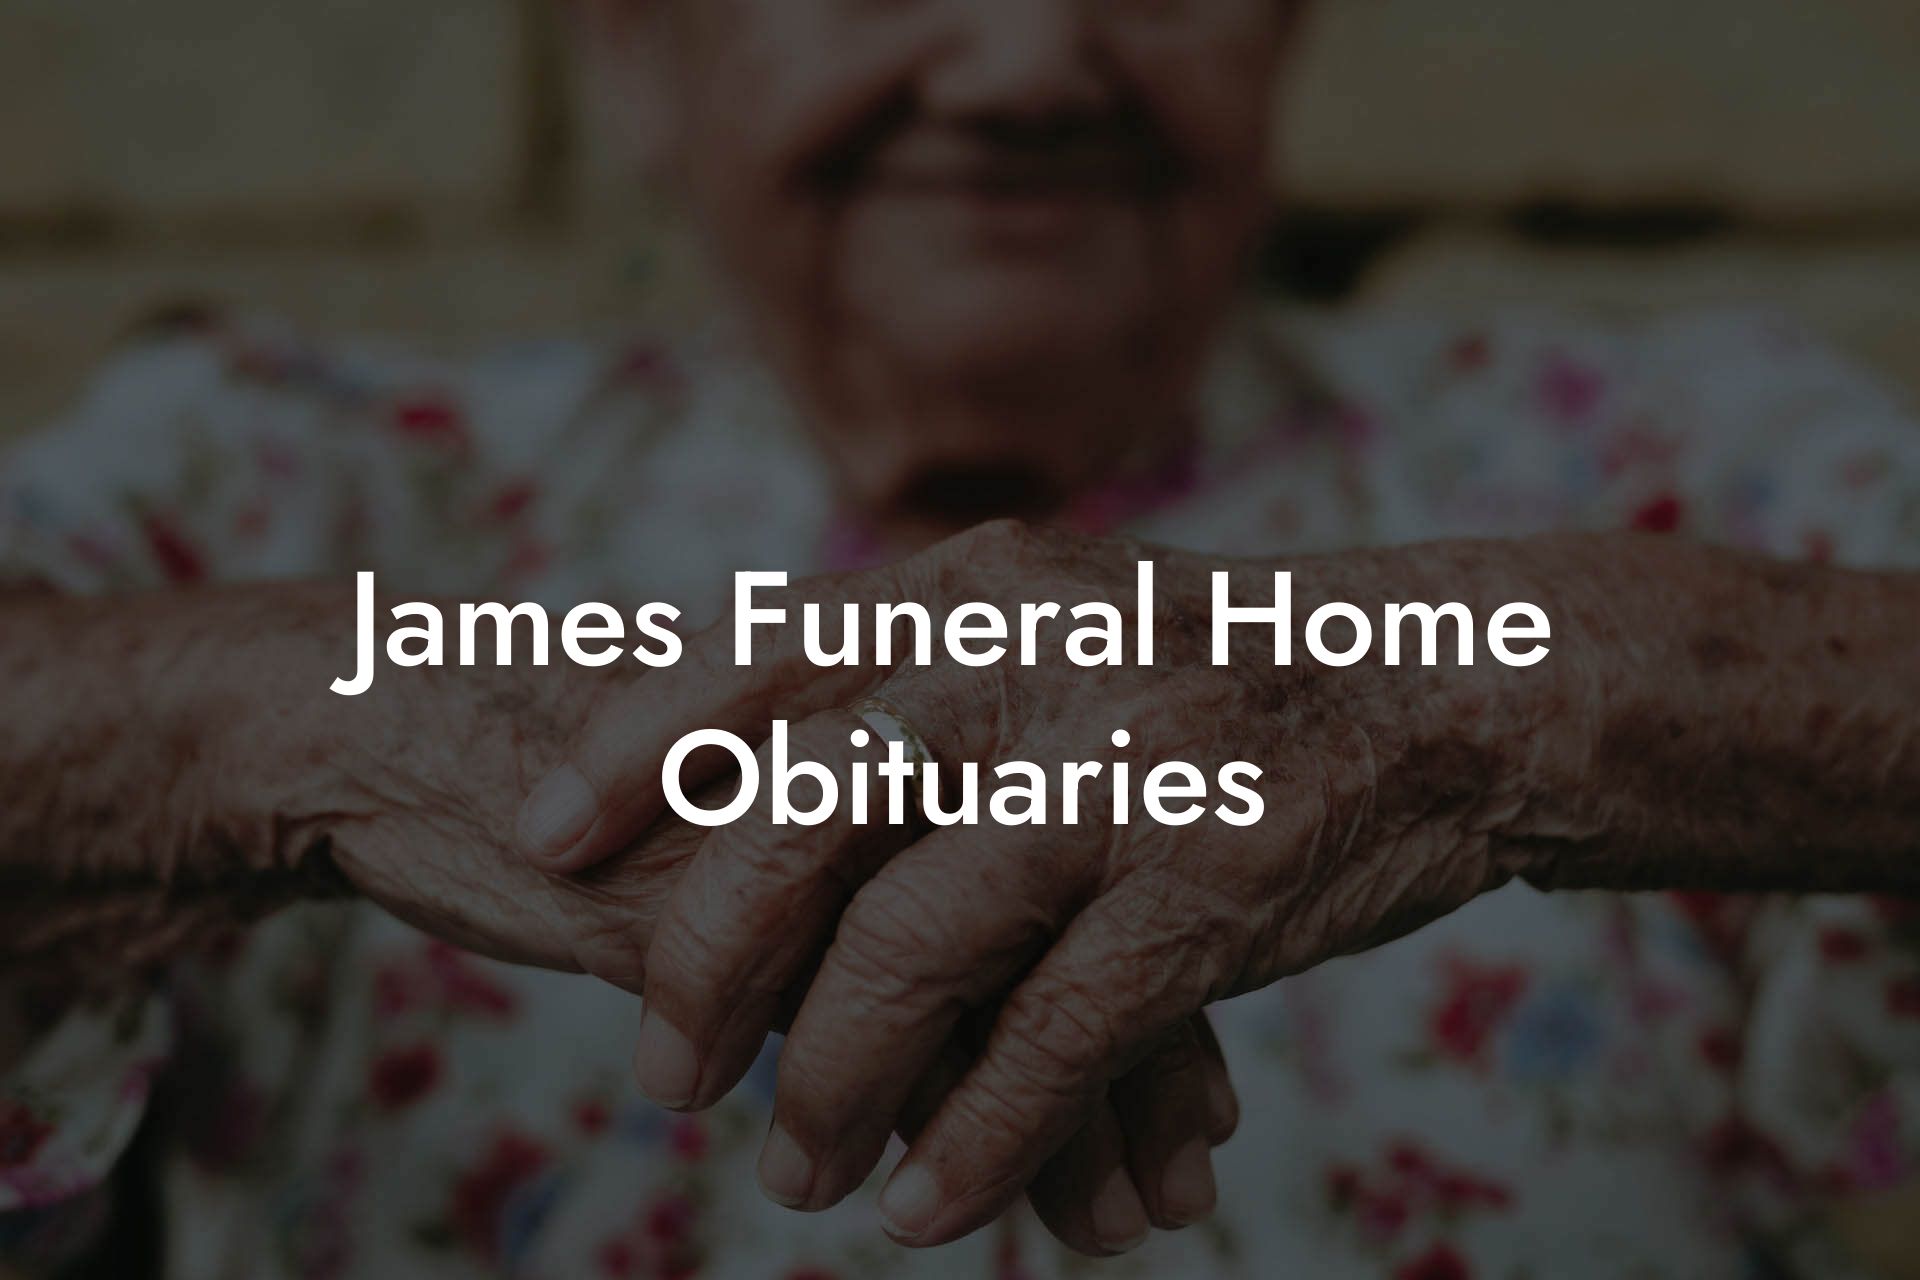 James Funeral Home Obituaries